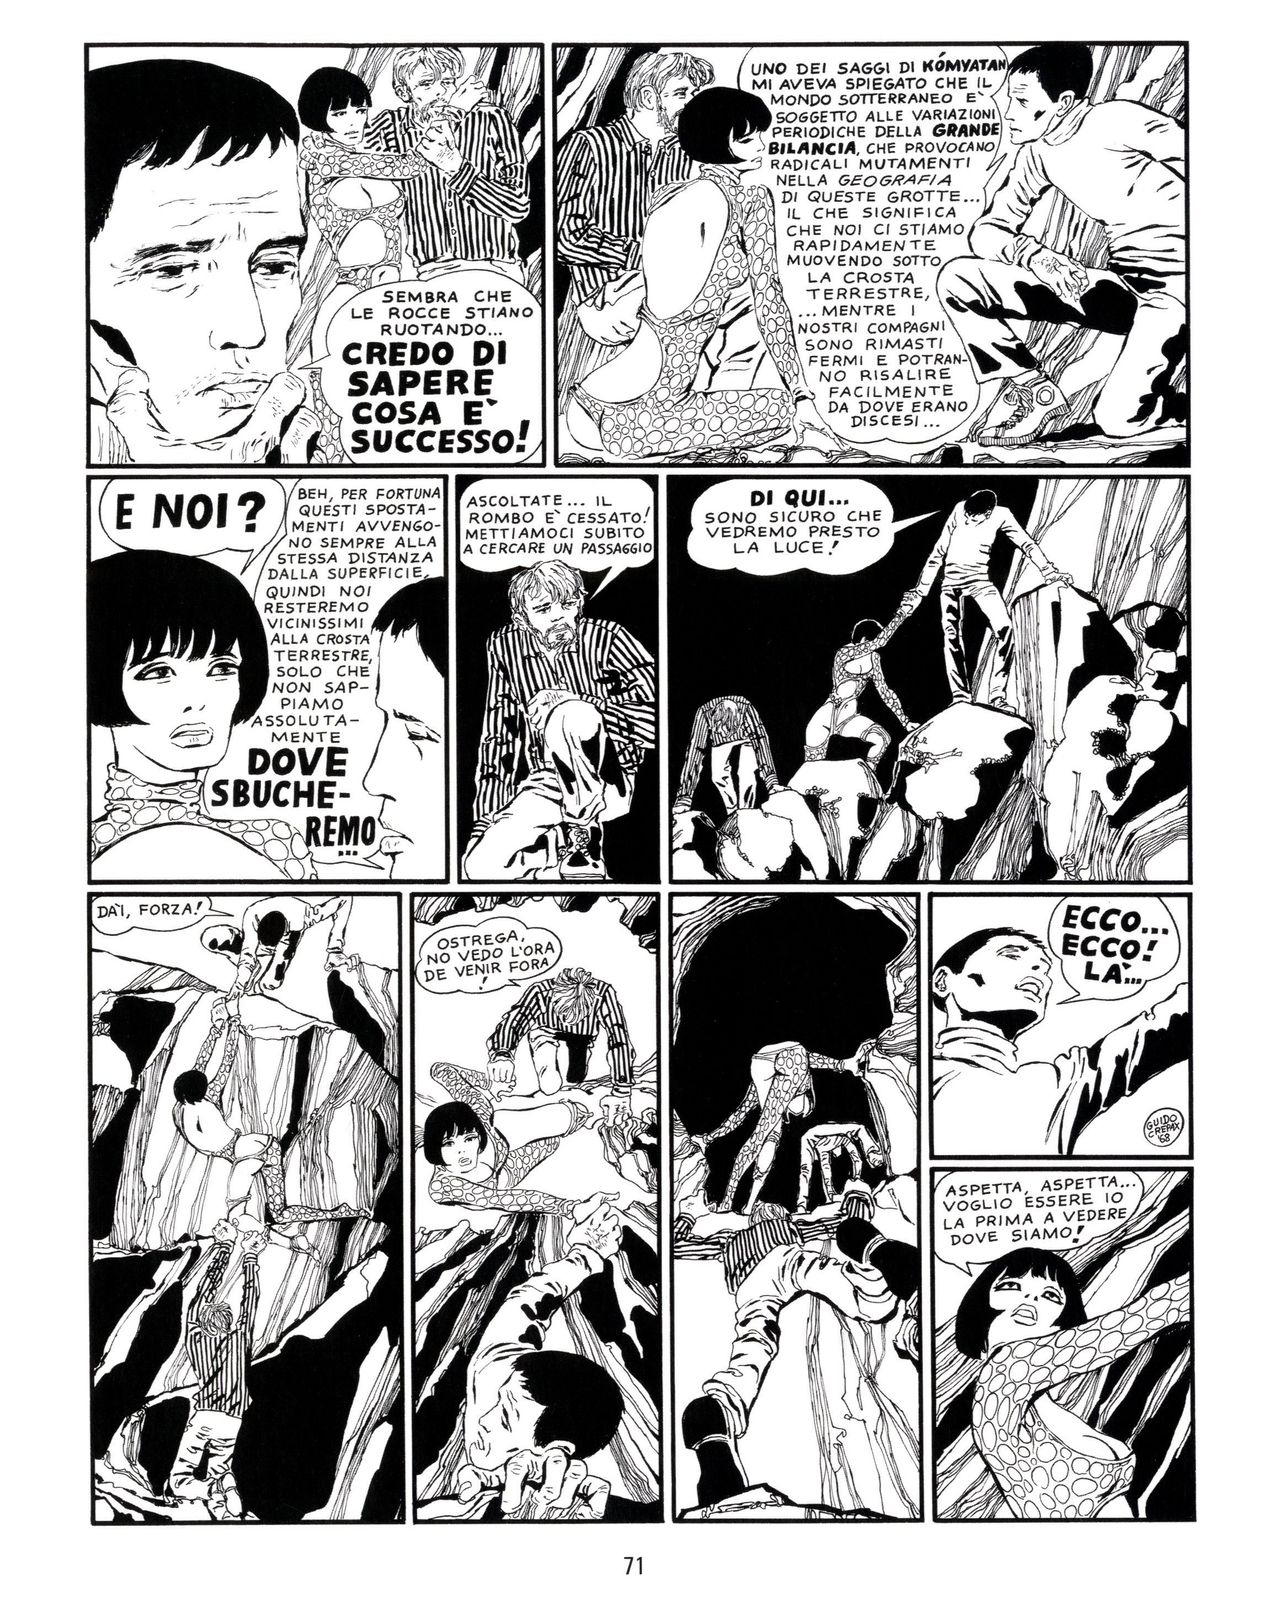 [Guido Crepax] Erotica Fumetti #25 : L'ascesa dei sotterranei : I cavalieri ciechi [Italian] 72